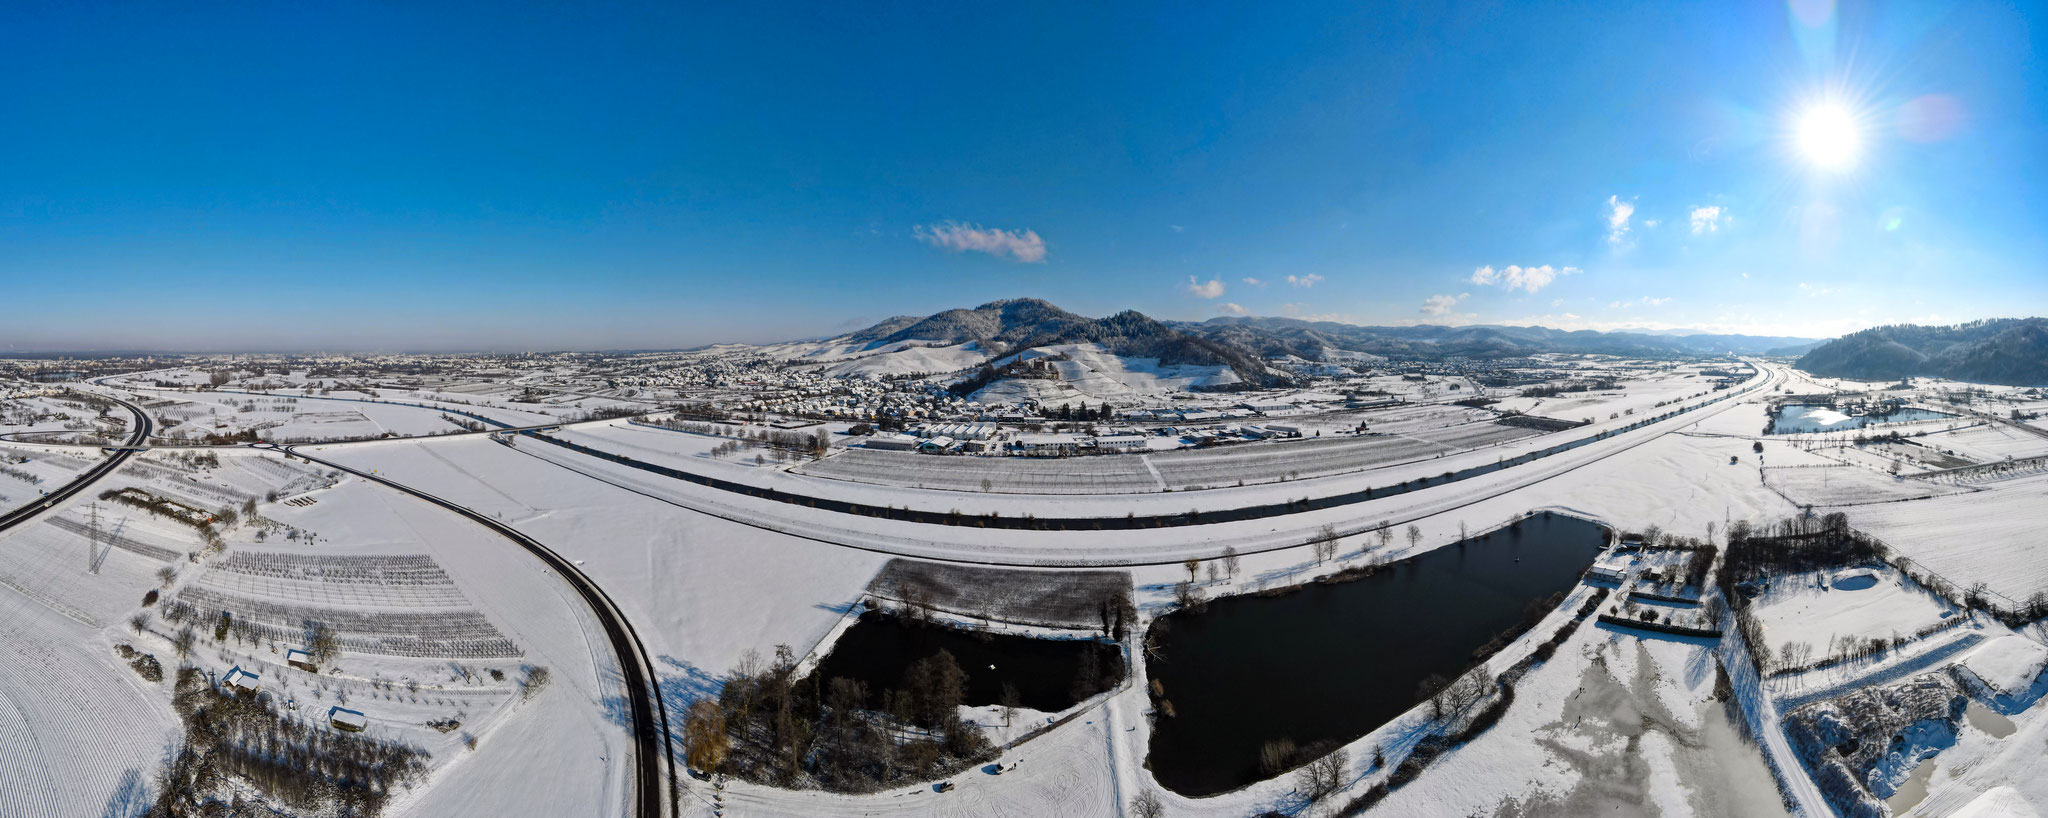 Winter - Panorama über Ortenberg